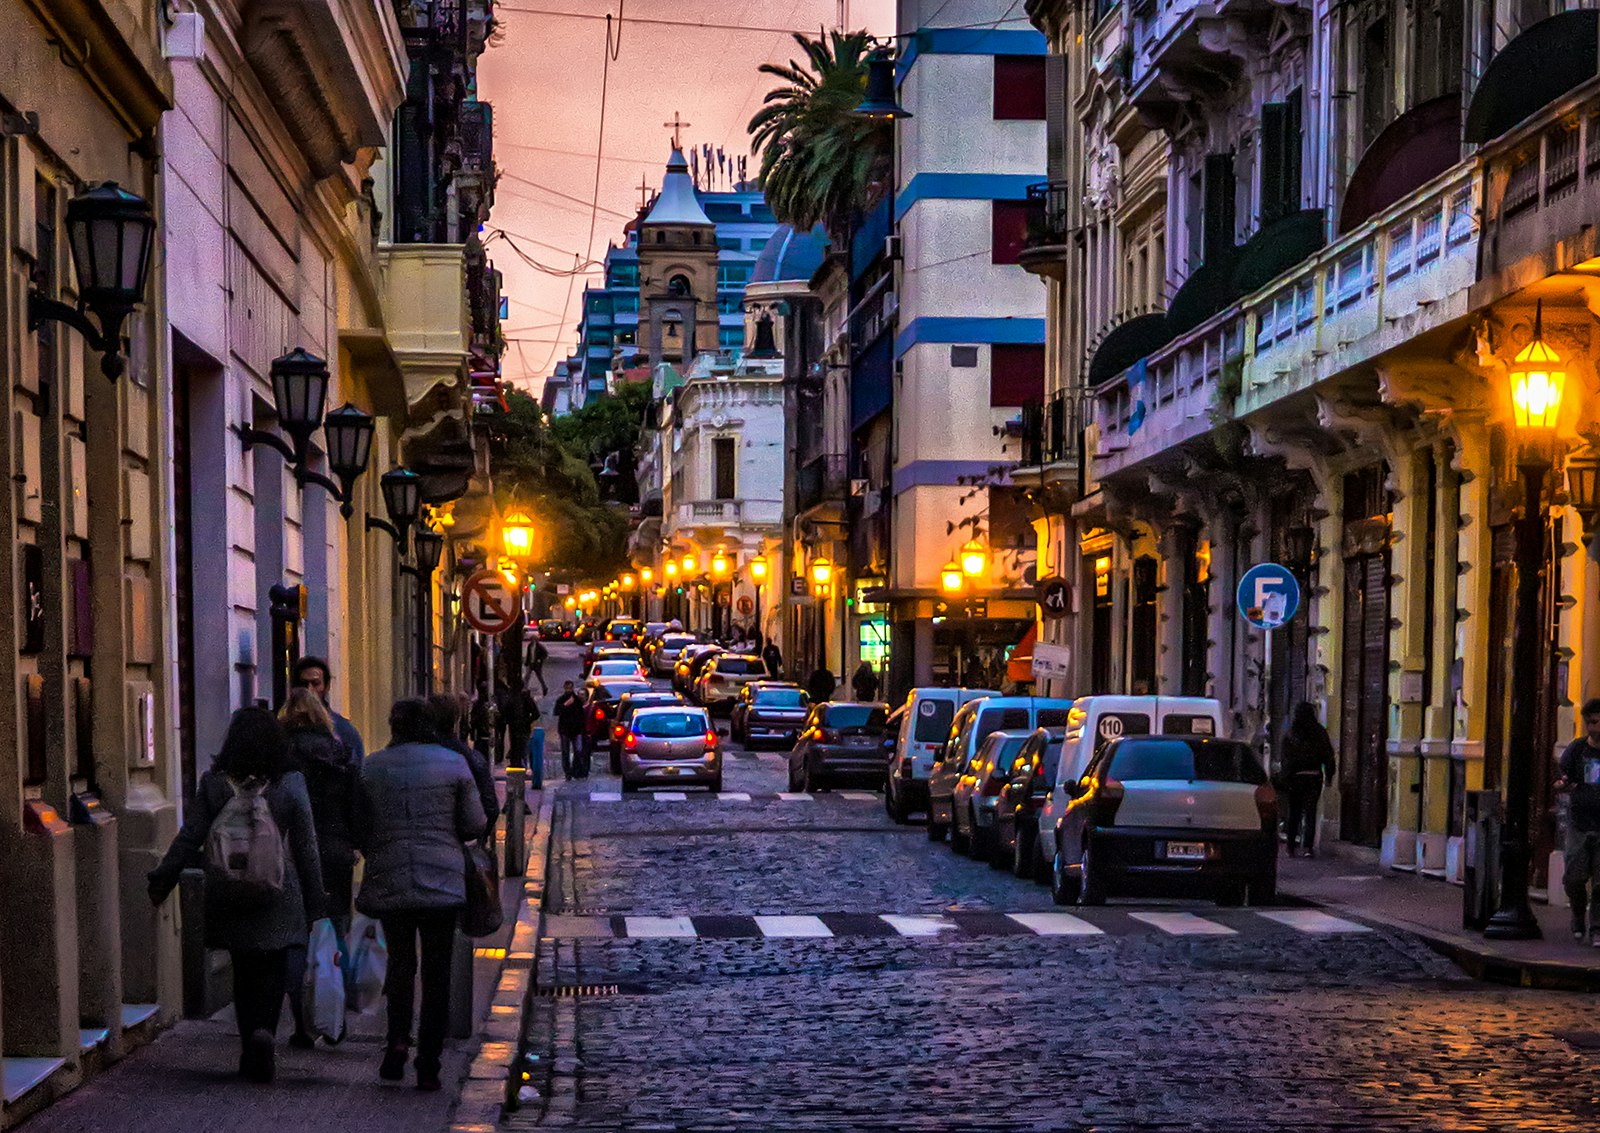 People walk on a sidewalk lining a cobblestone street in Buenos Aires' San Telmo neighborhood at dusk